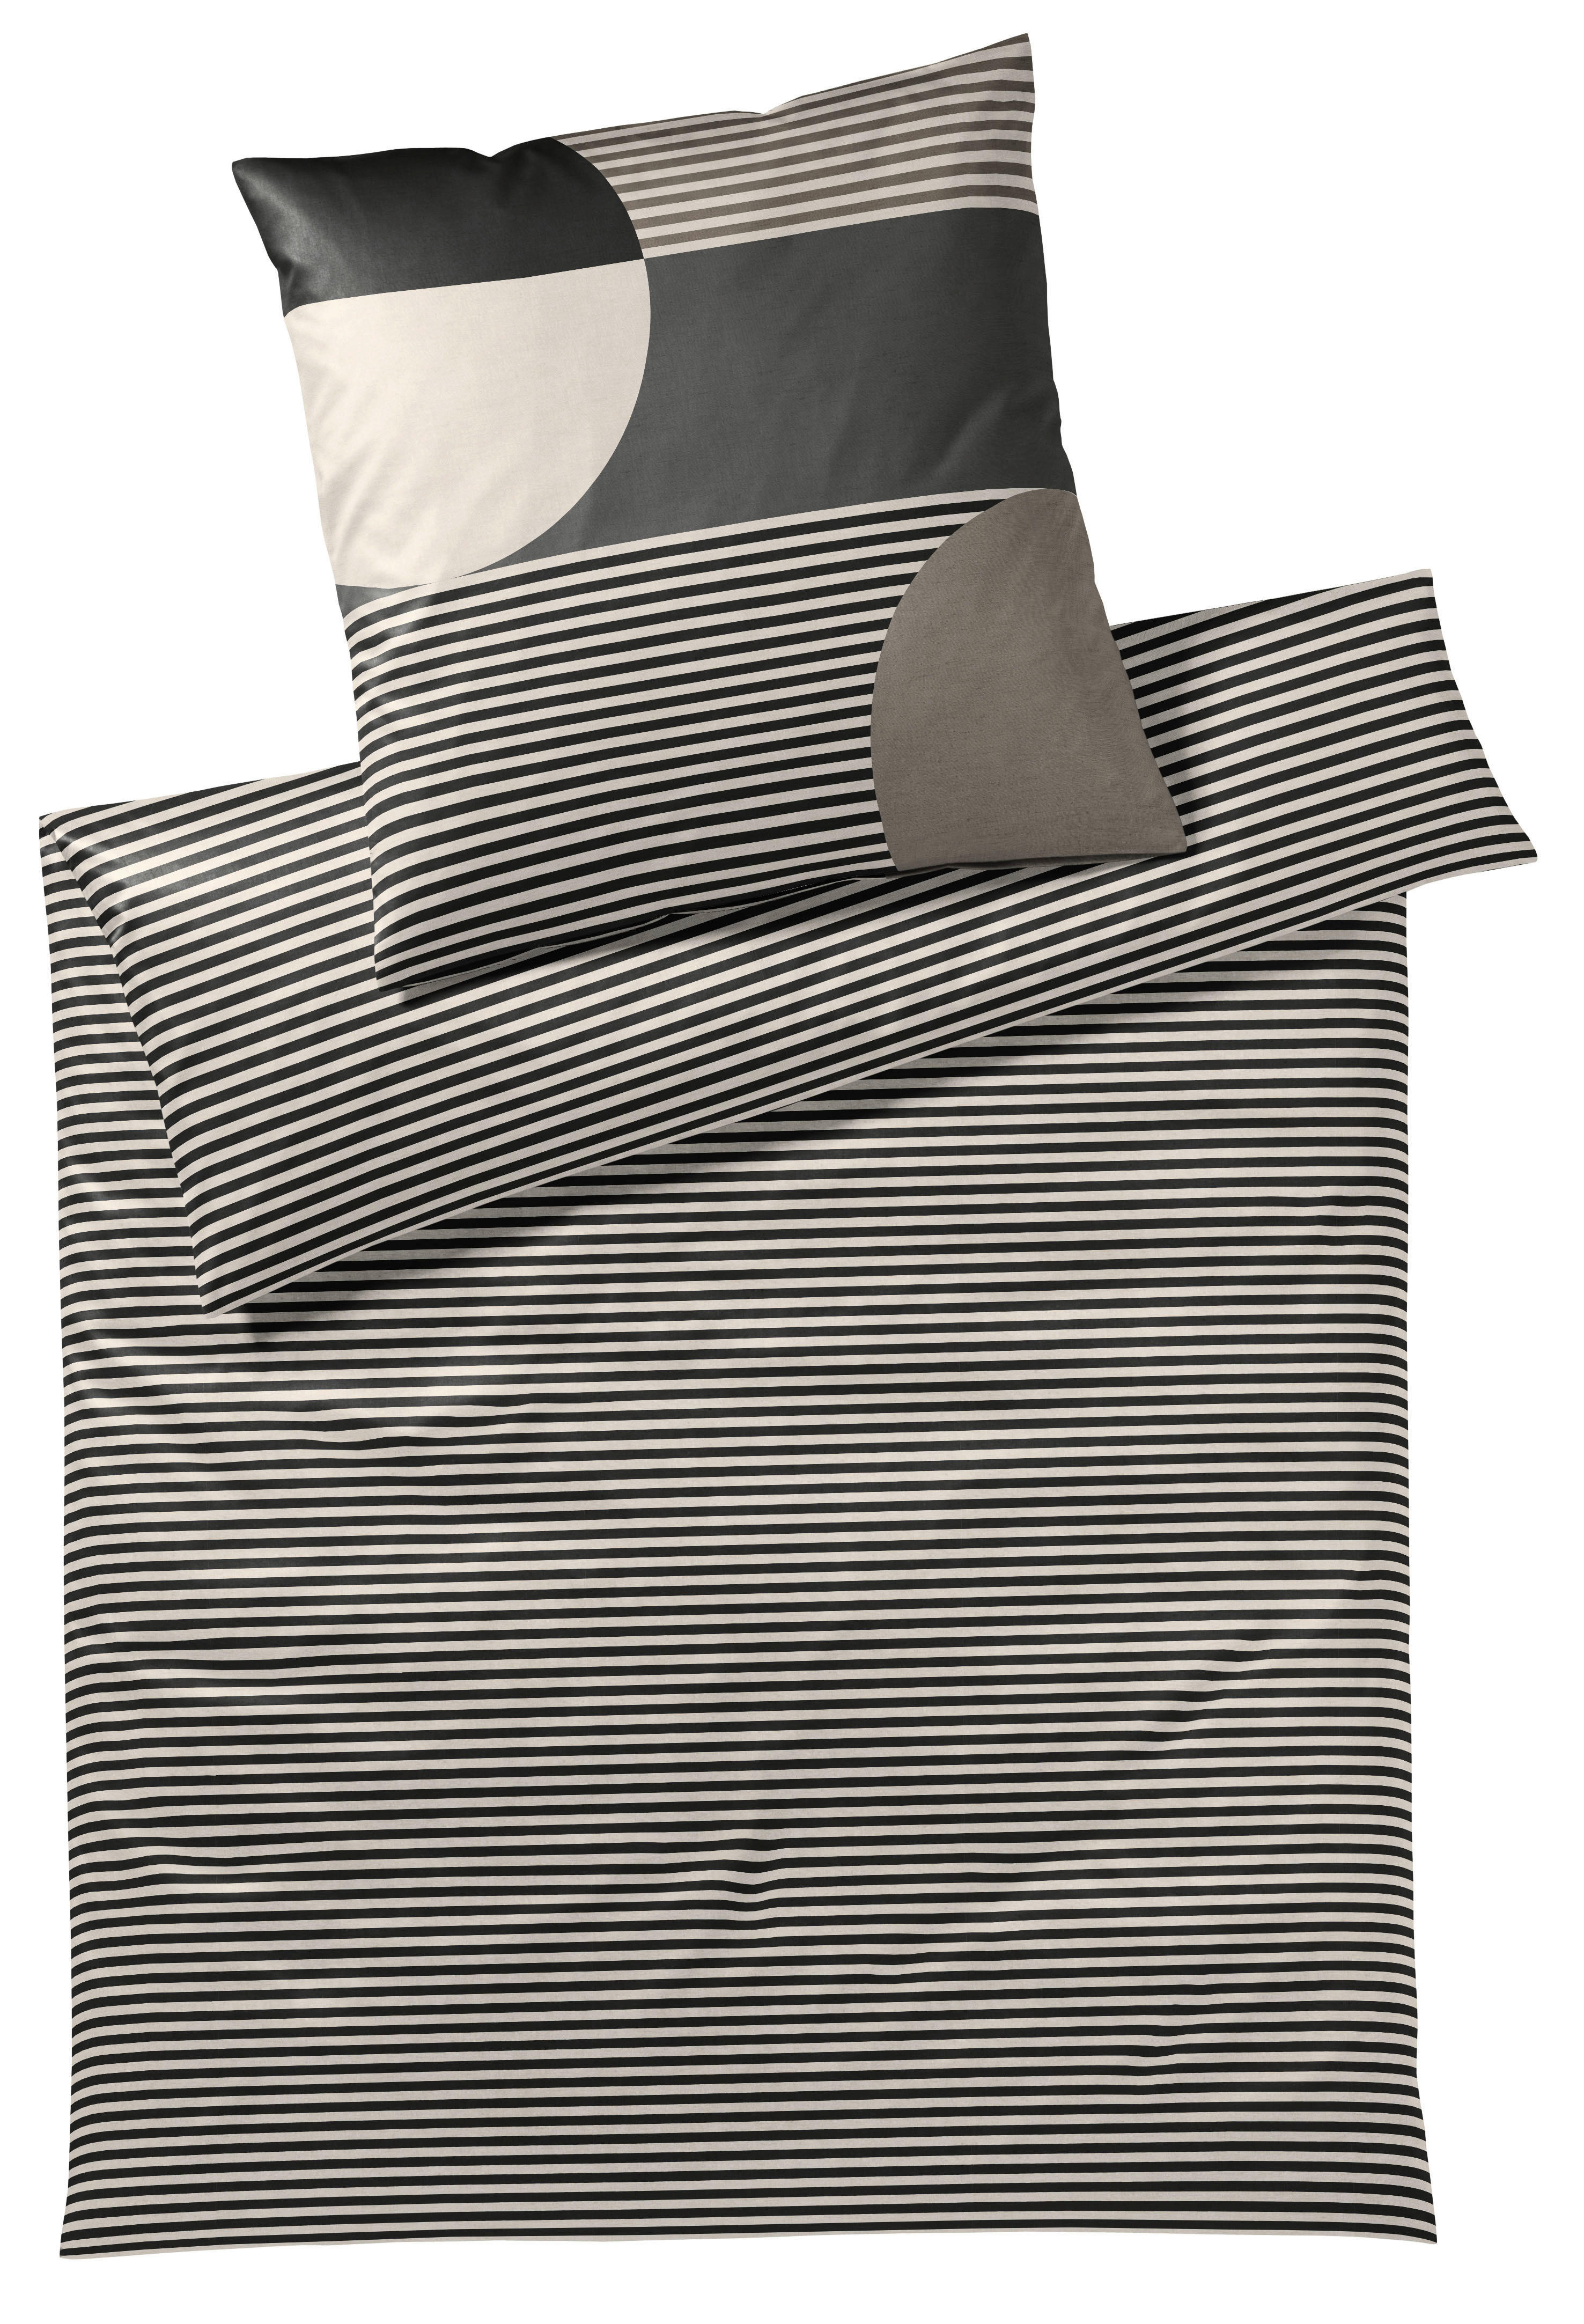 BETTWÄSCHE Dune Perkal  - Schwarz/Grau, Basics, Textil (135/200cm) - Yes for bed